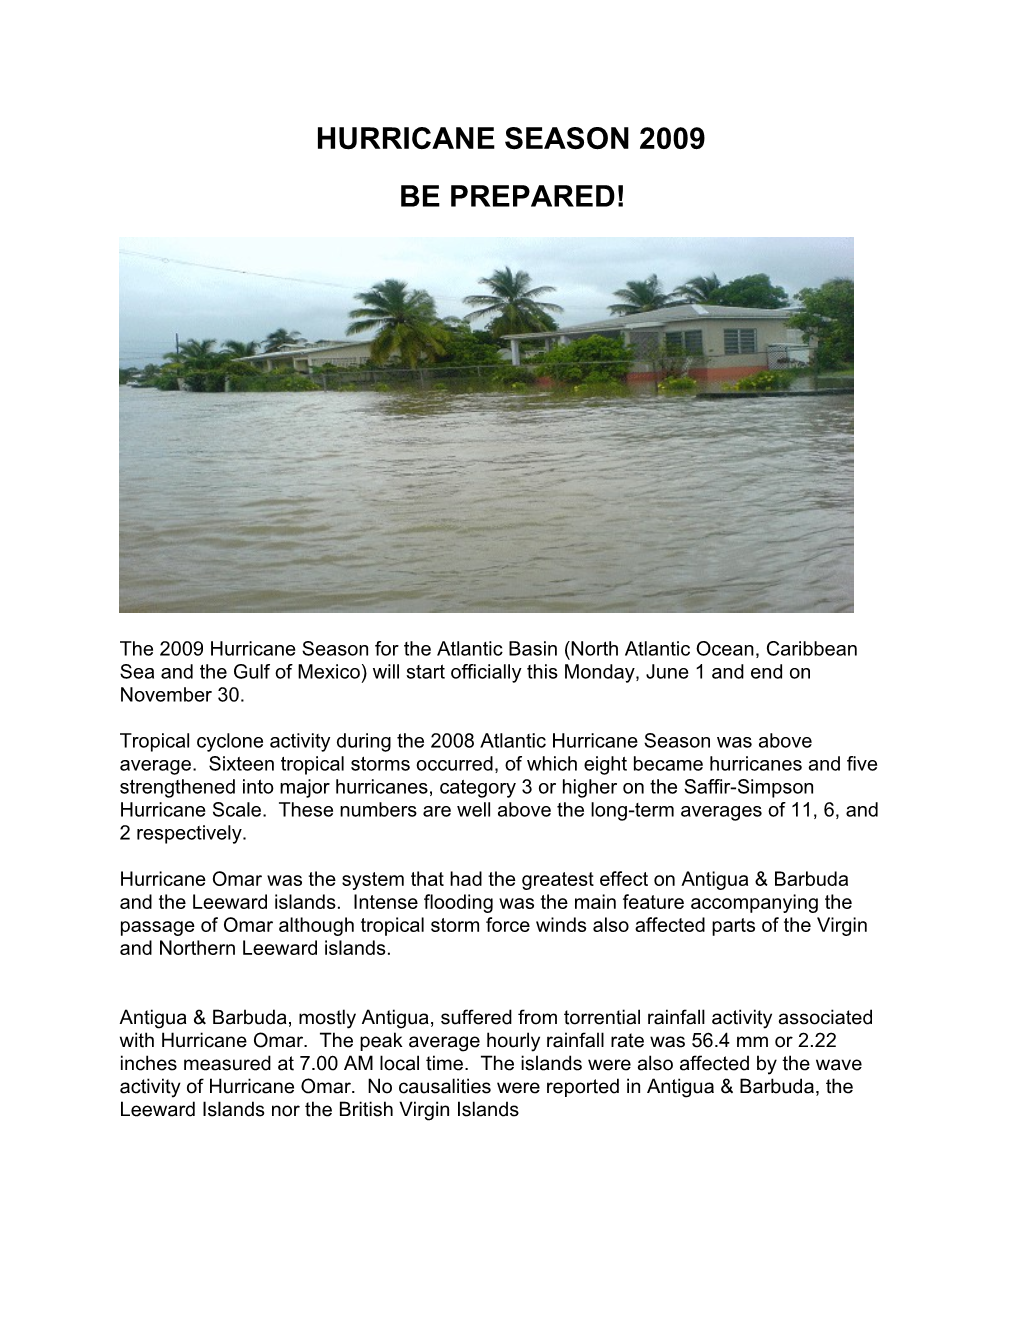 Hurricane Season 2009: It Is Essential to Be Well Prepared